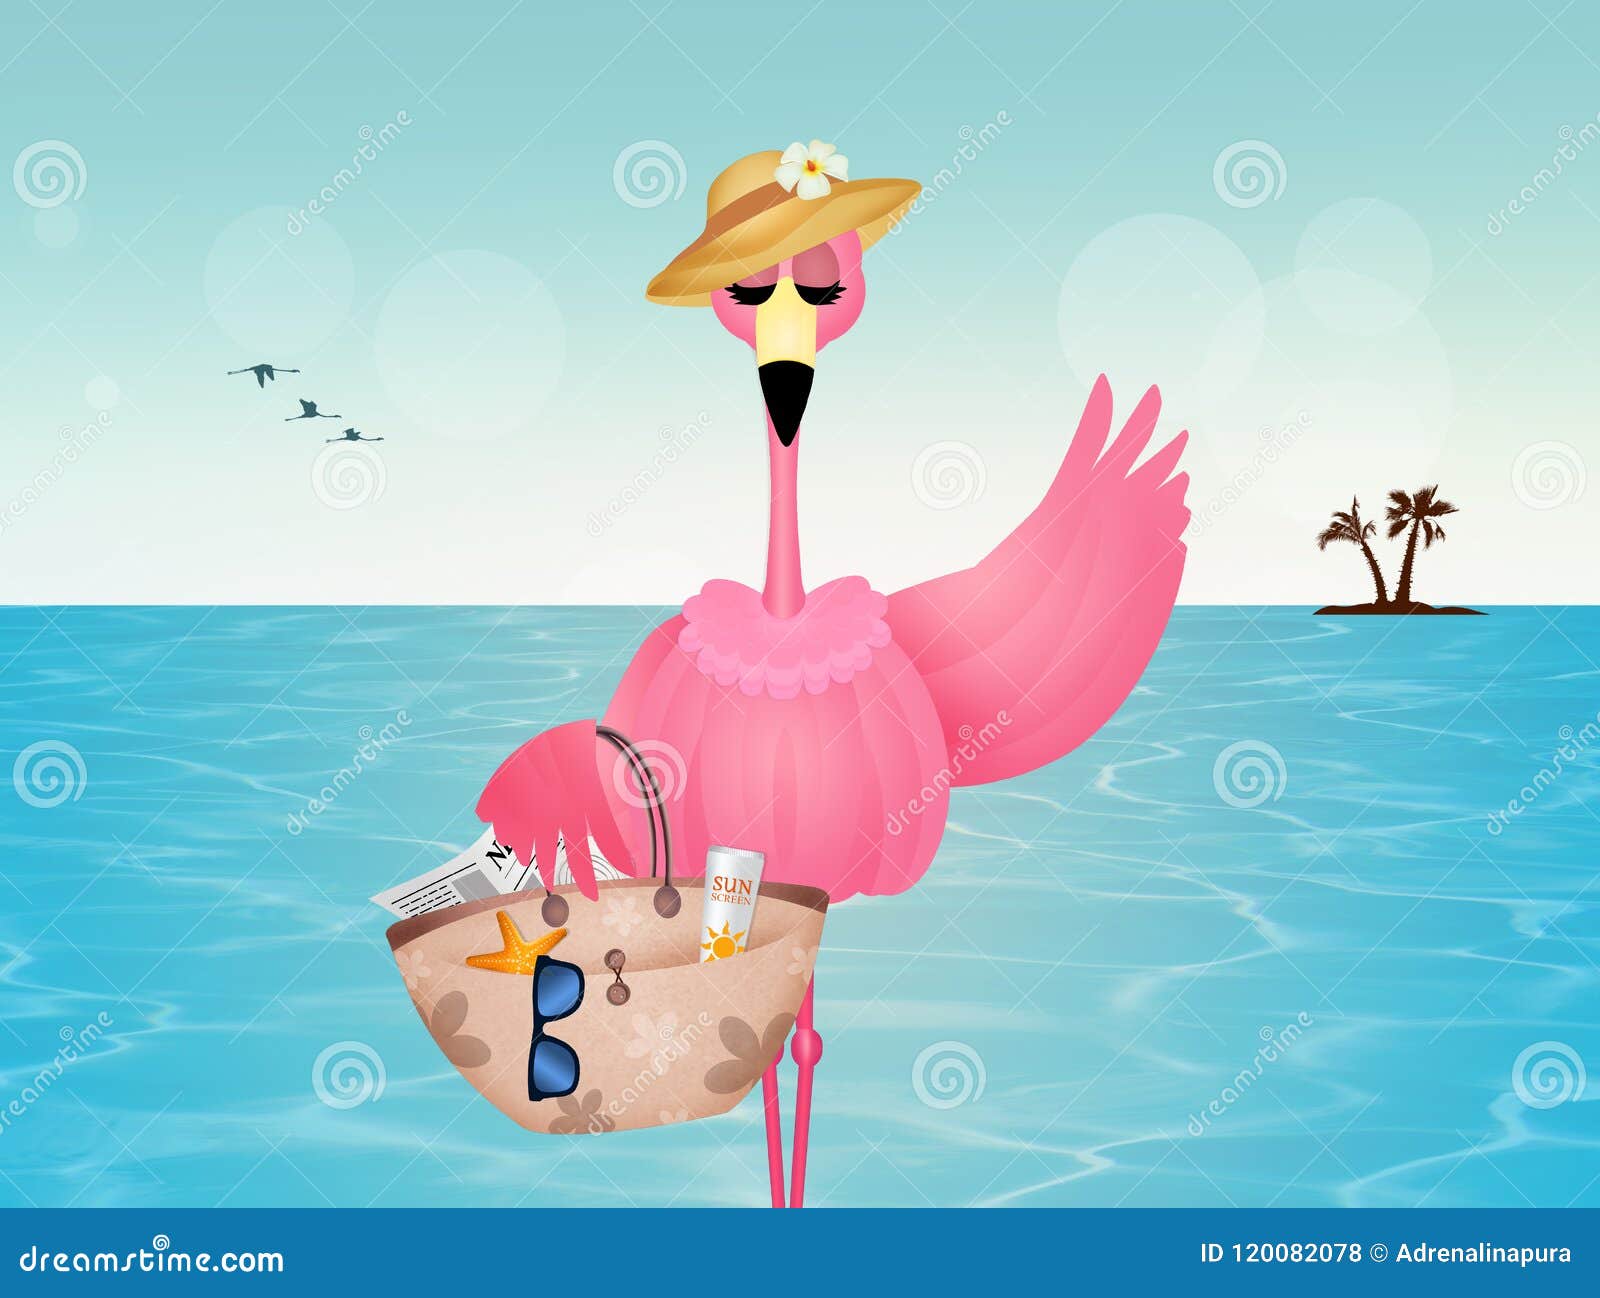 pink flamingo beach bag